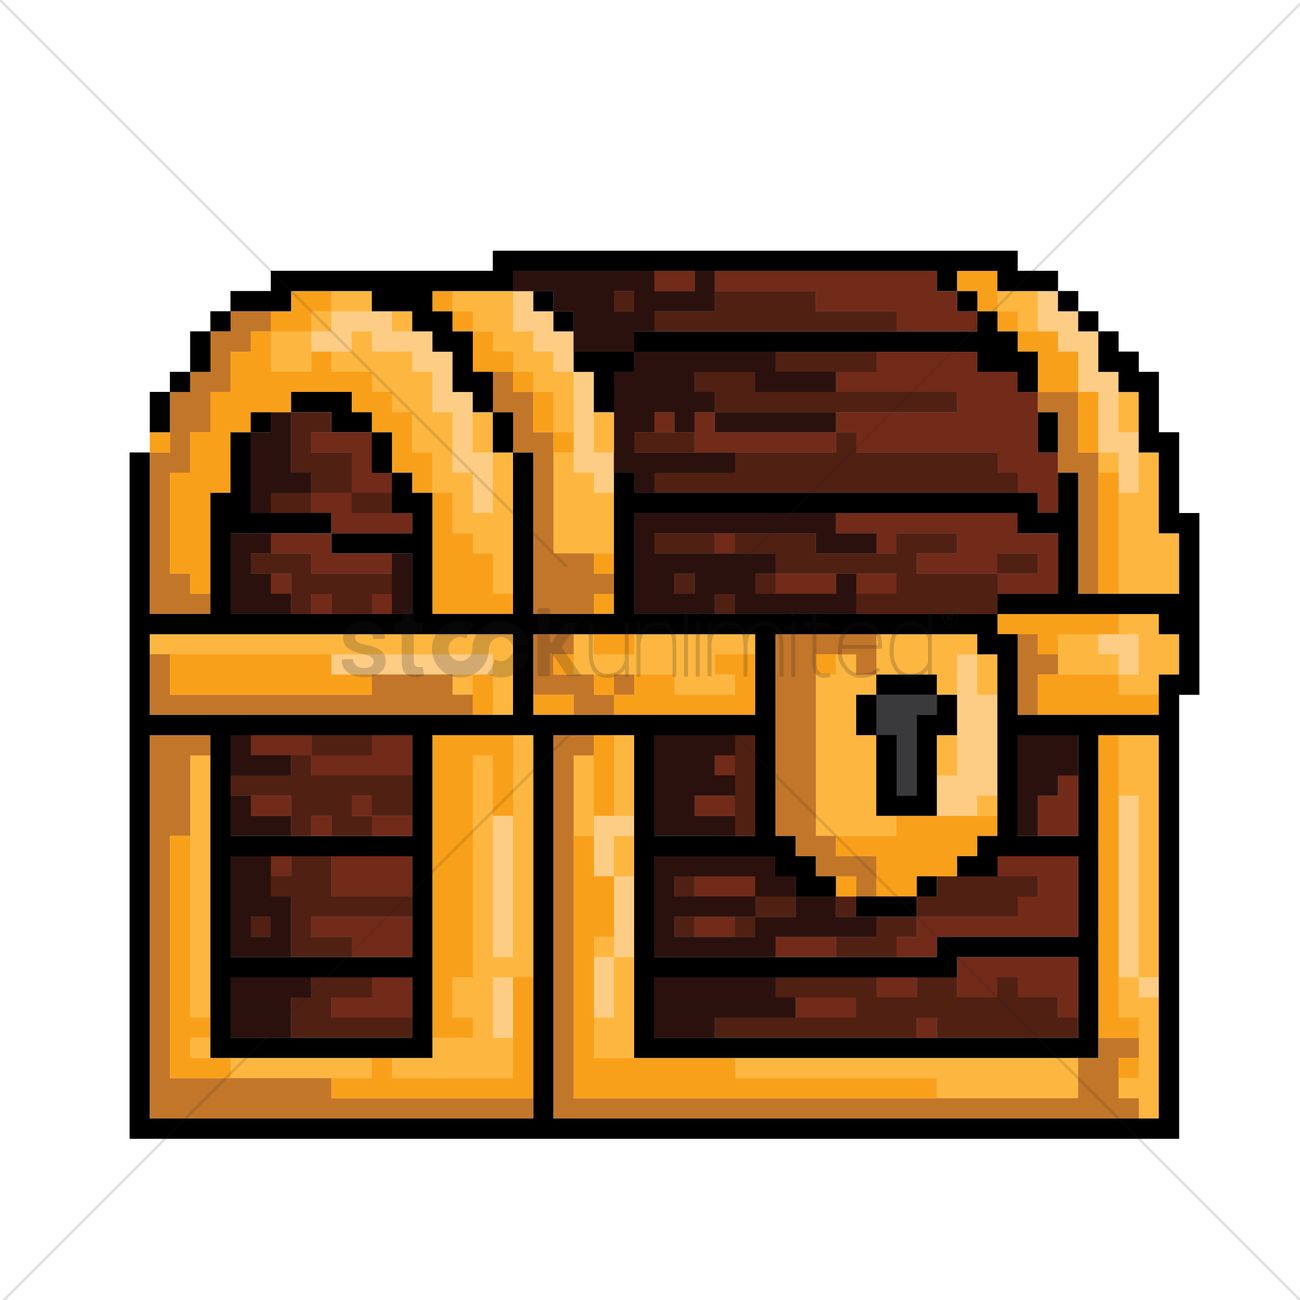 Pixel art treasure chest Vector Image - 1959576 | StockUnlimited